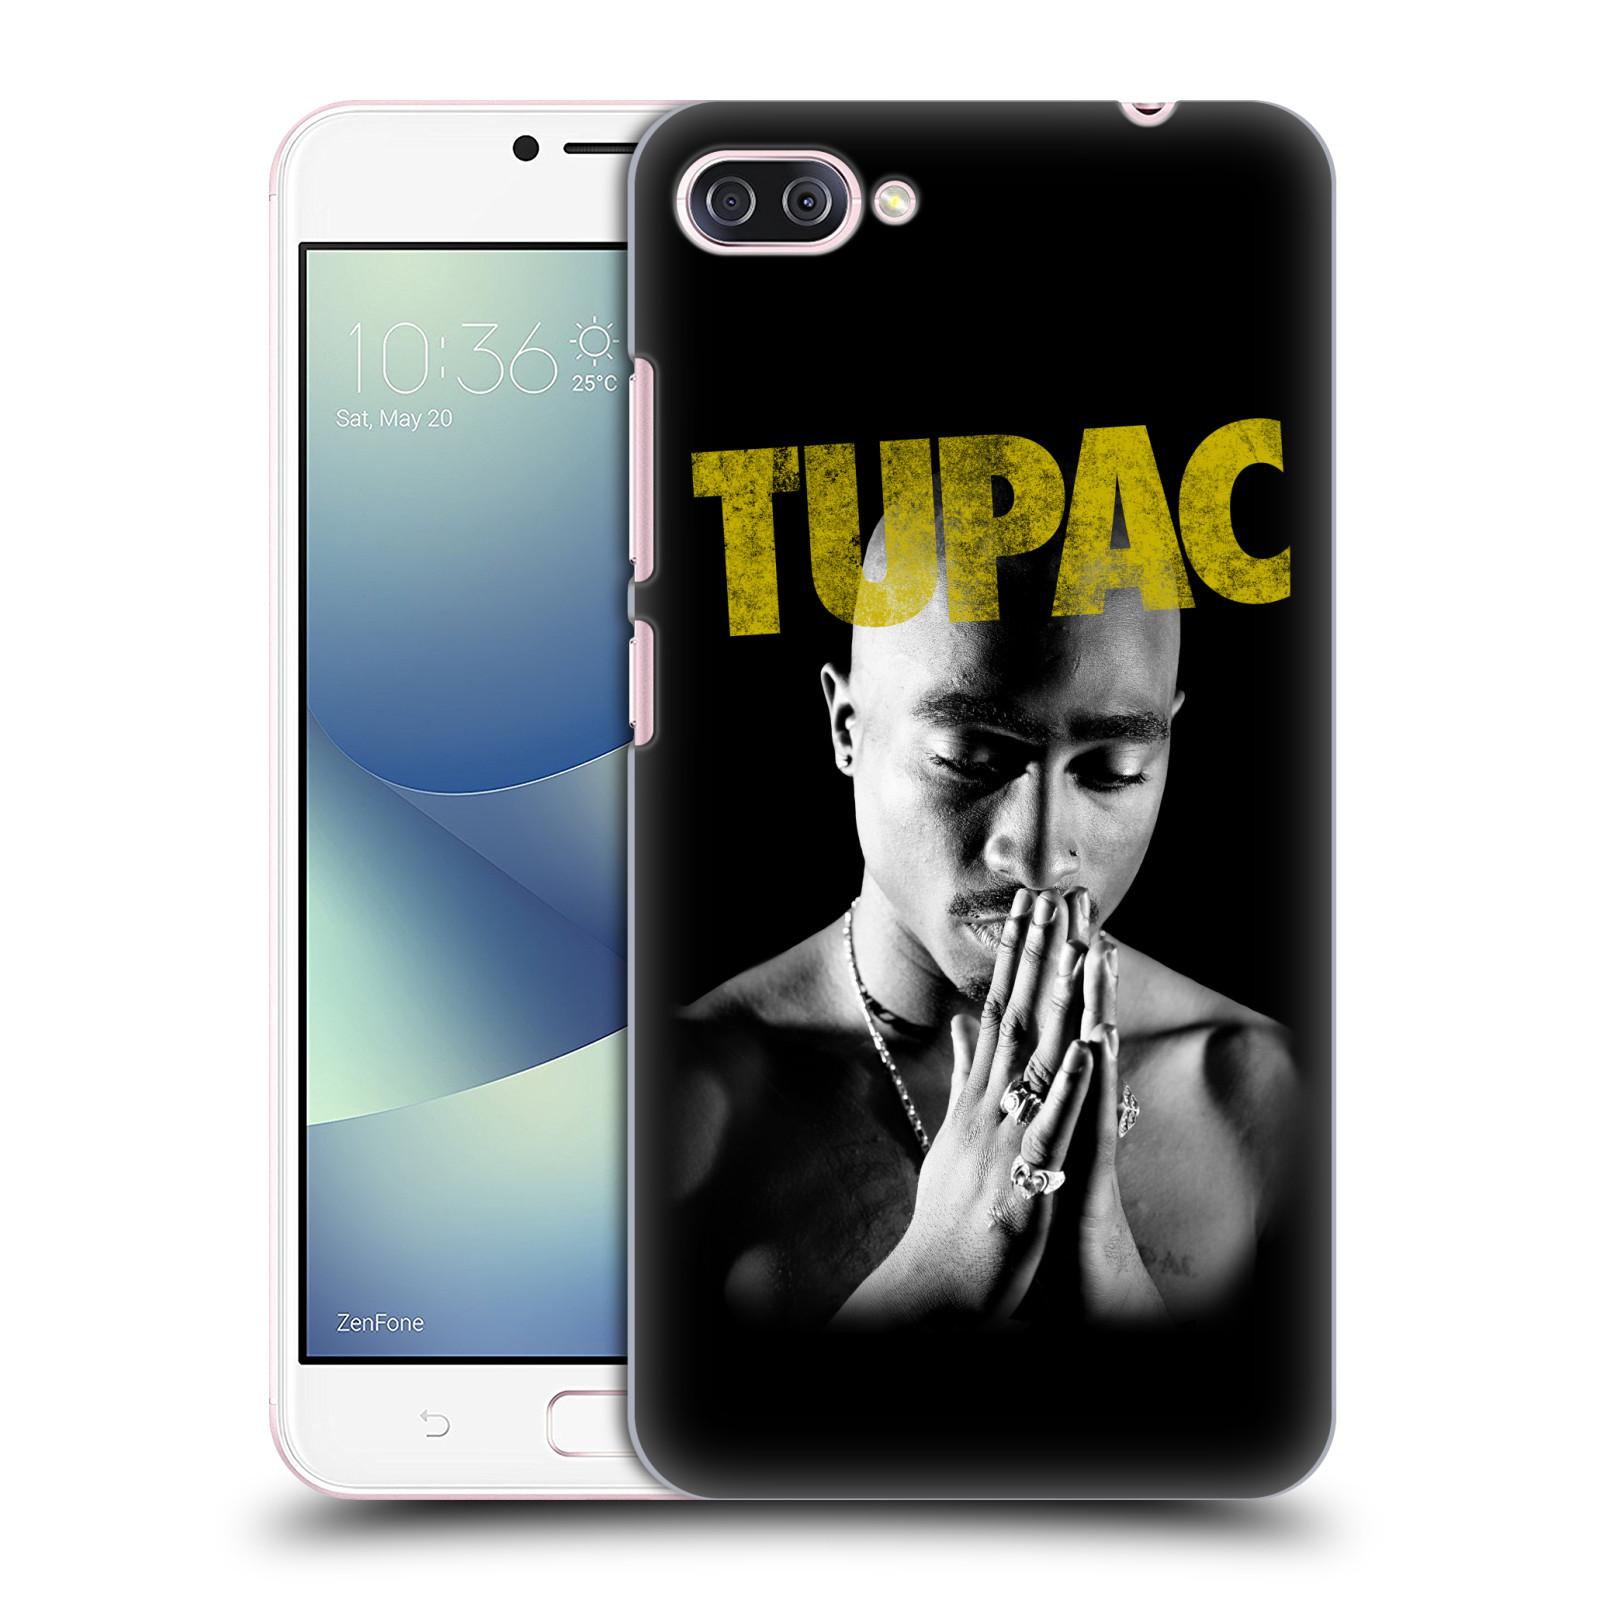 HEAD CASE plastový obal na mobil Asus Zenfone 4 MAX ZC554KL Zpěvák rapper Tupac Shakur 2Pac zlatý nadpis